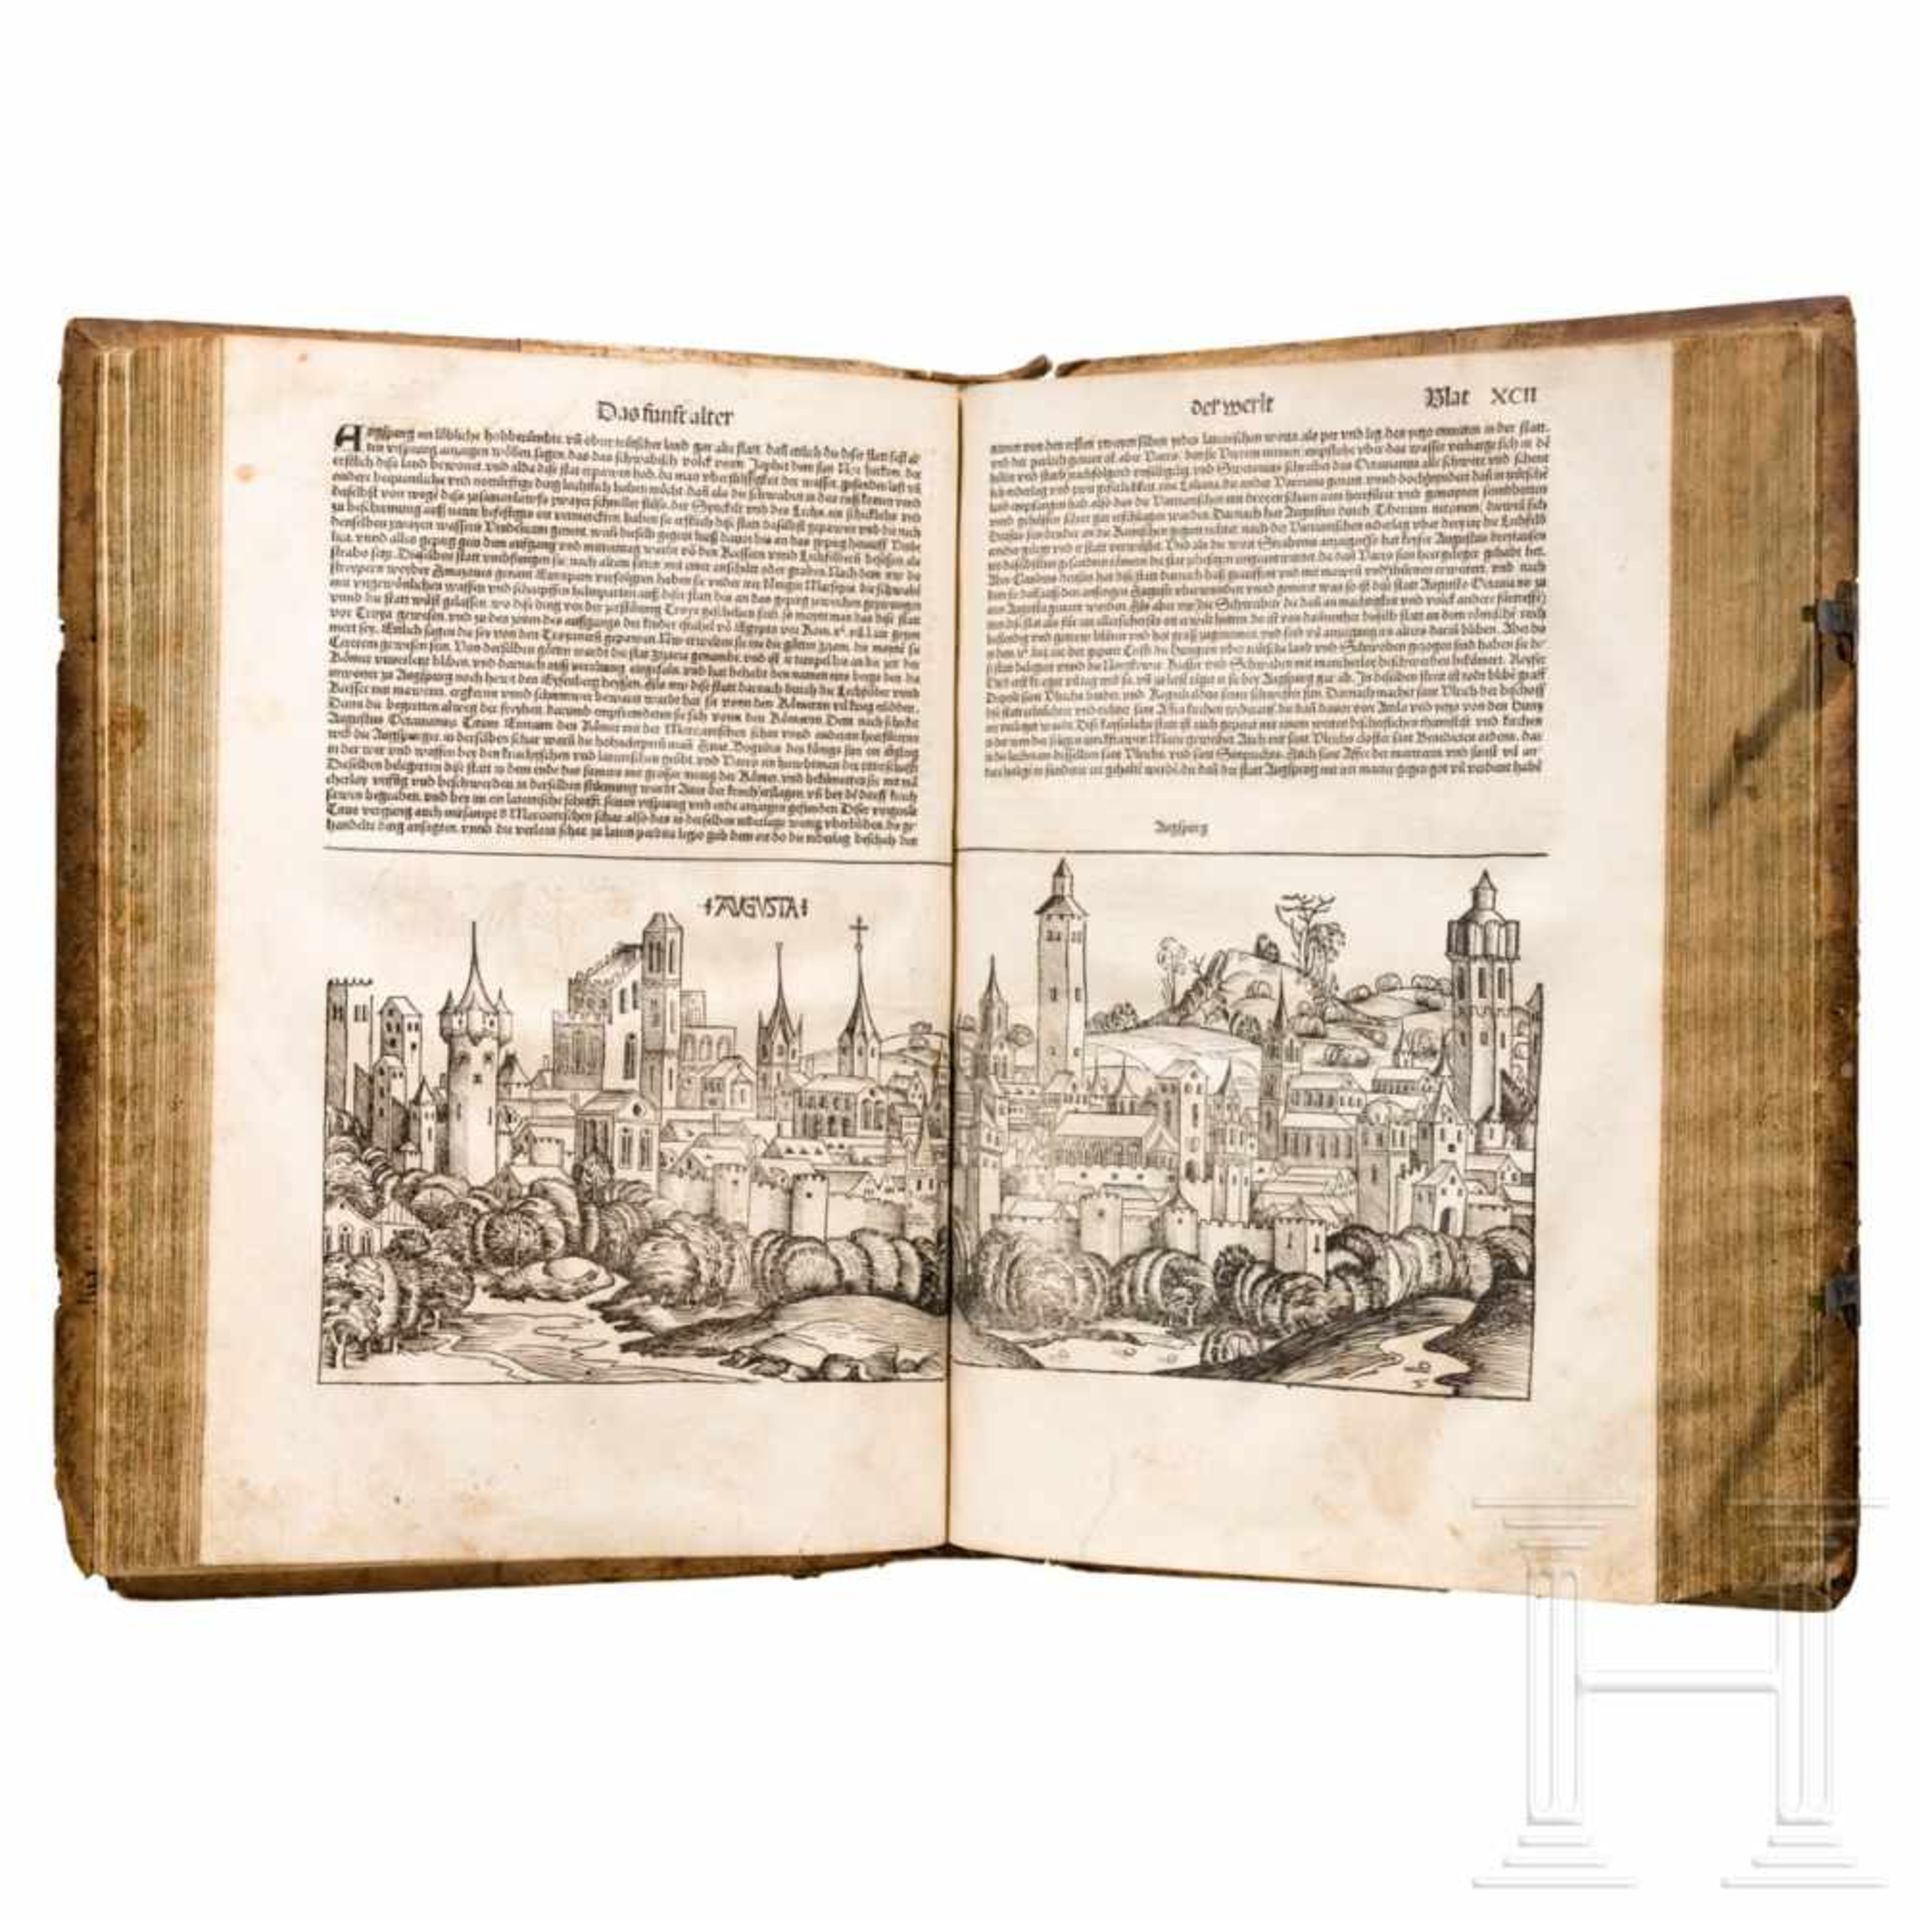 Hartmann Schedel, Das Buch der Chroniken, Nürnberg, A. Koberger, 1493 - Image 30 of 51